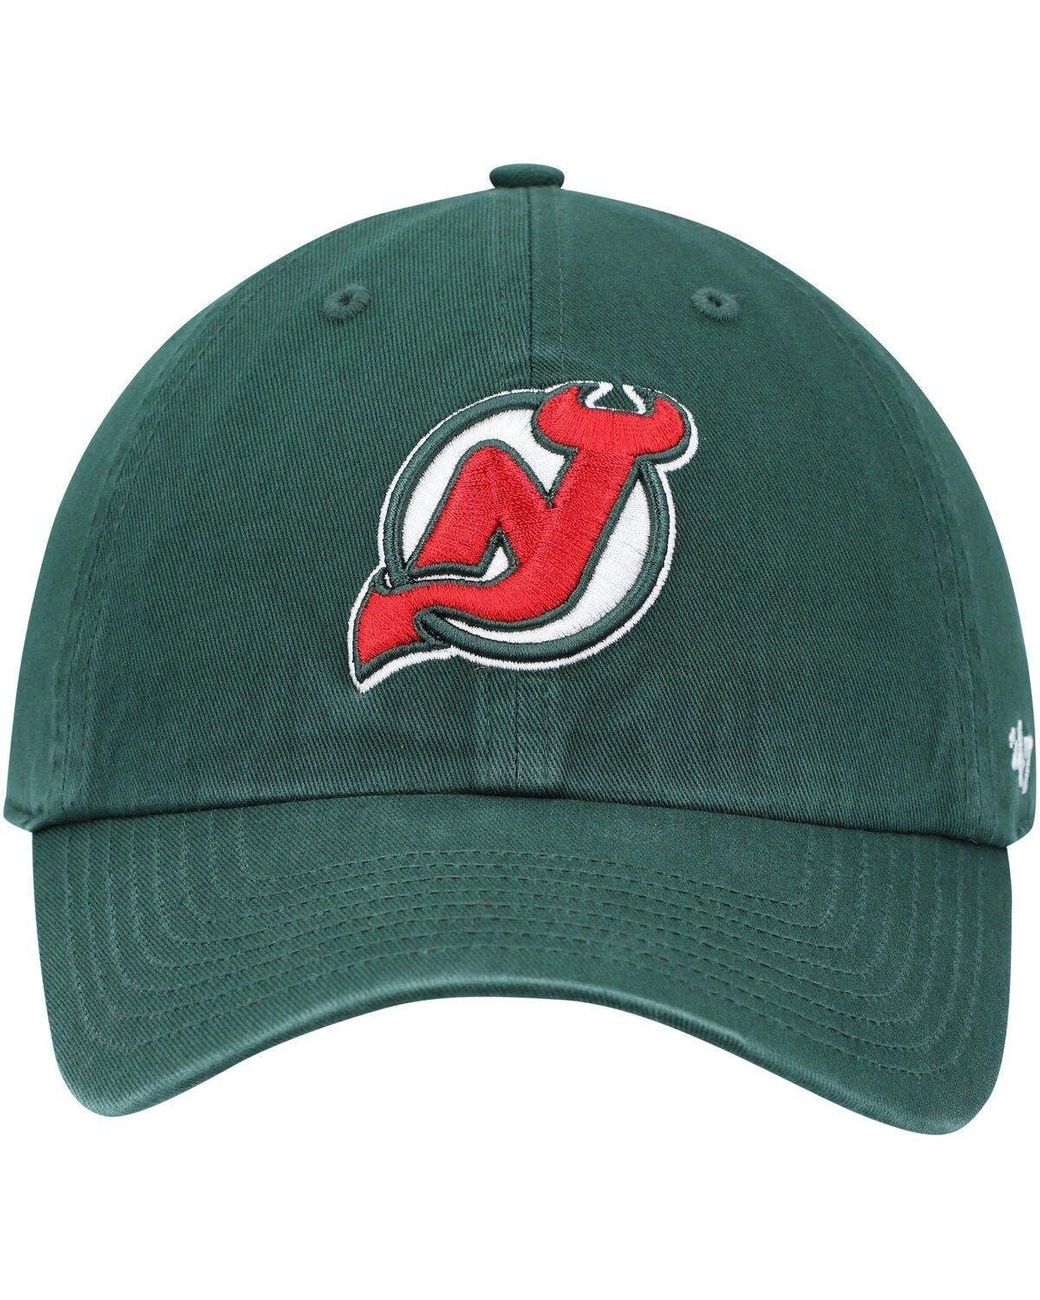 47 Brand Rawhide Trucker Hat - New Jersey Devils - Adult